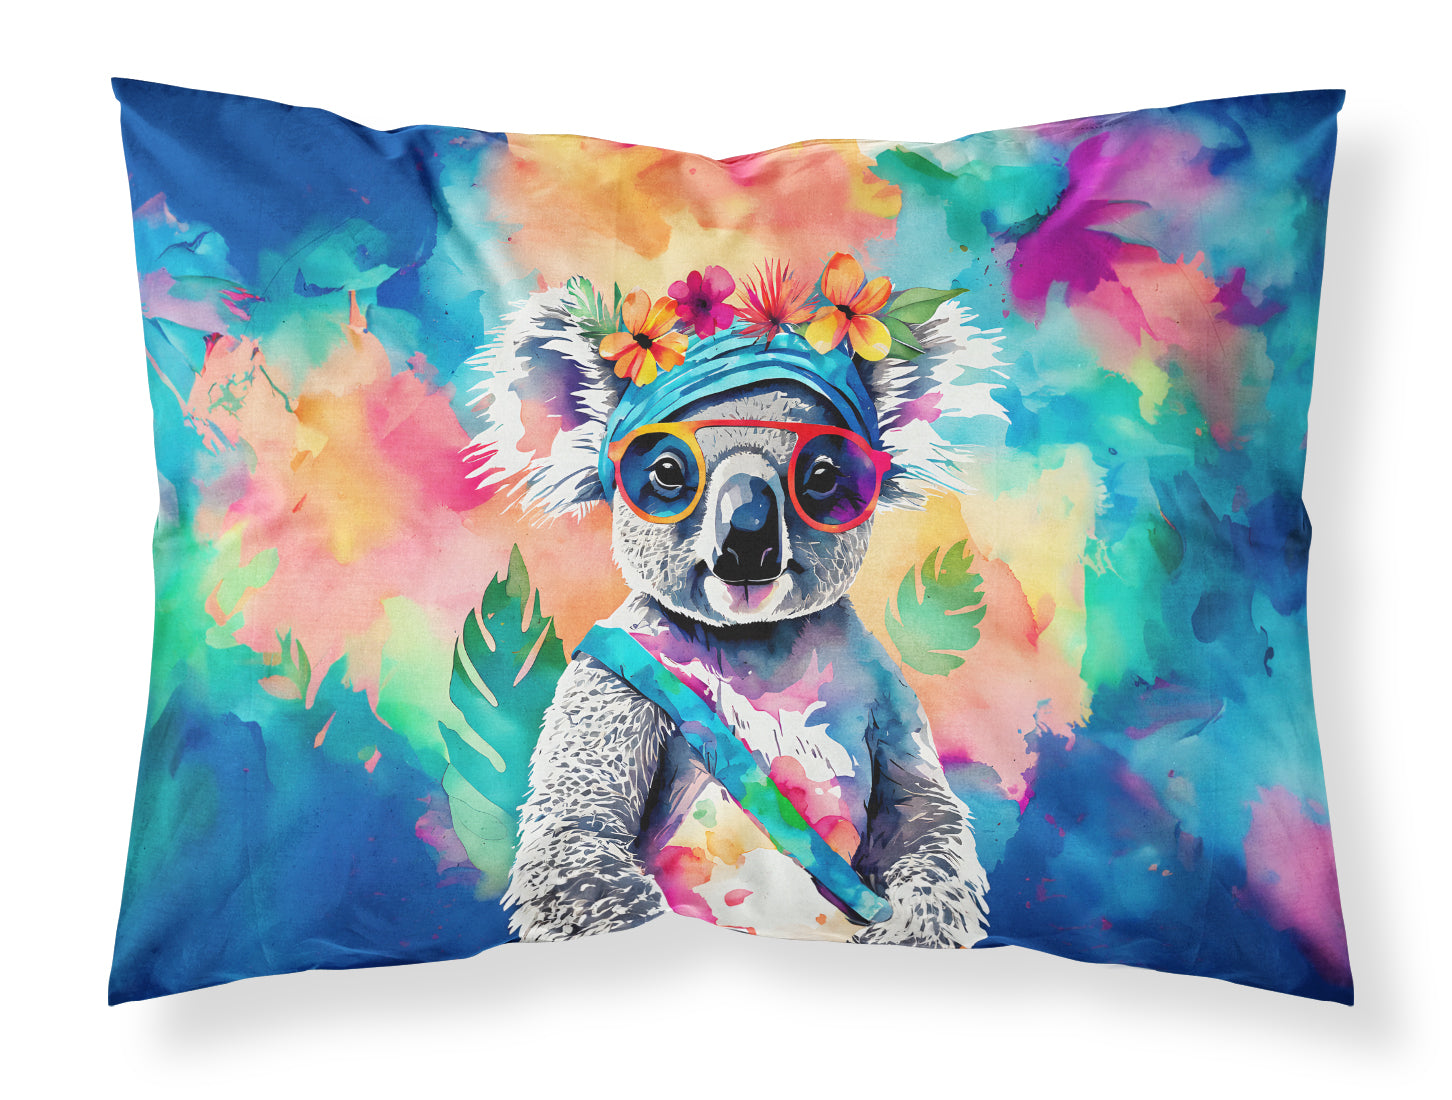 Buy this Hippie Animal Koala Standard Pillowcase